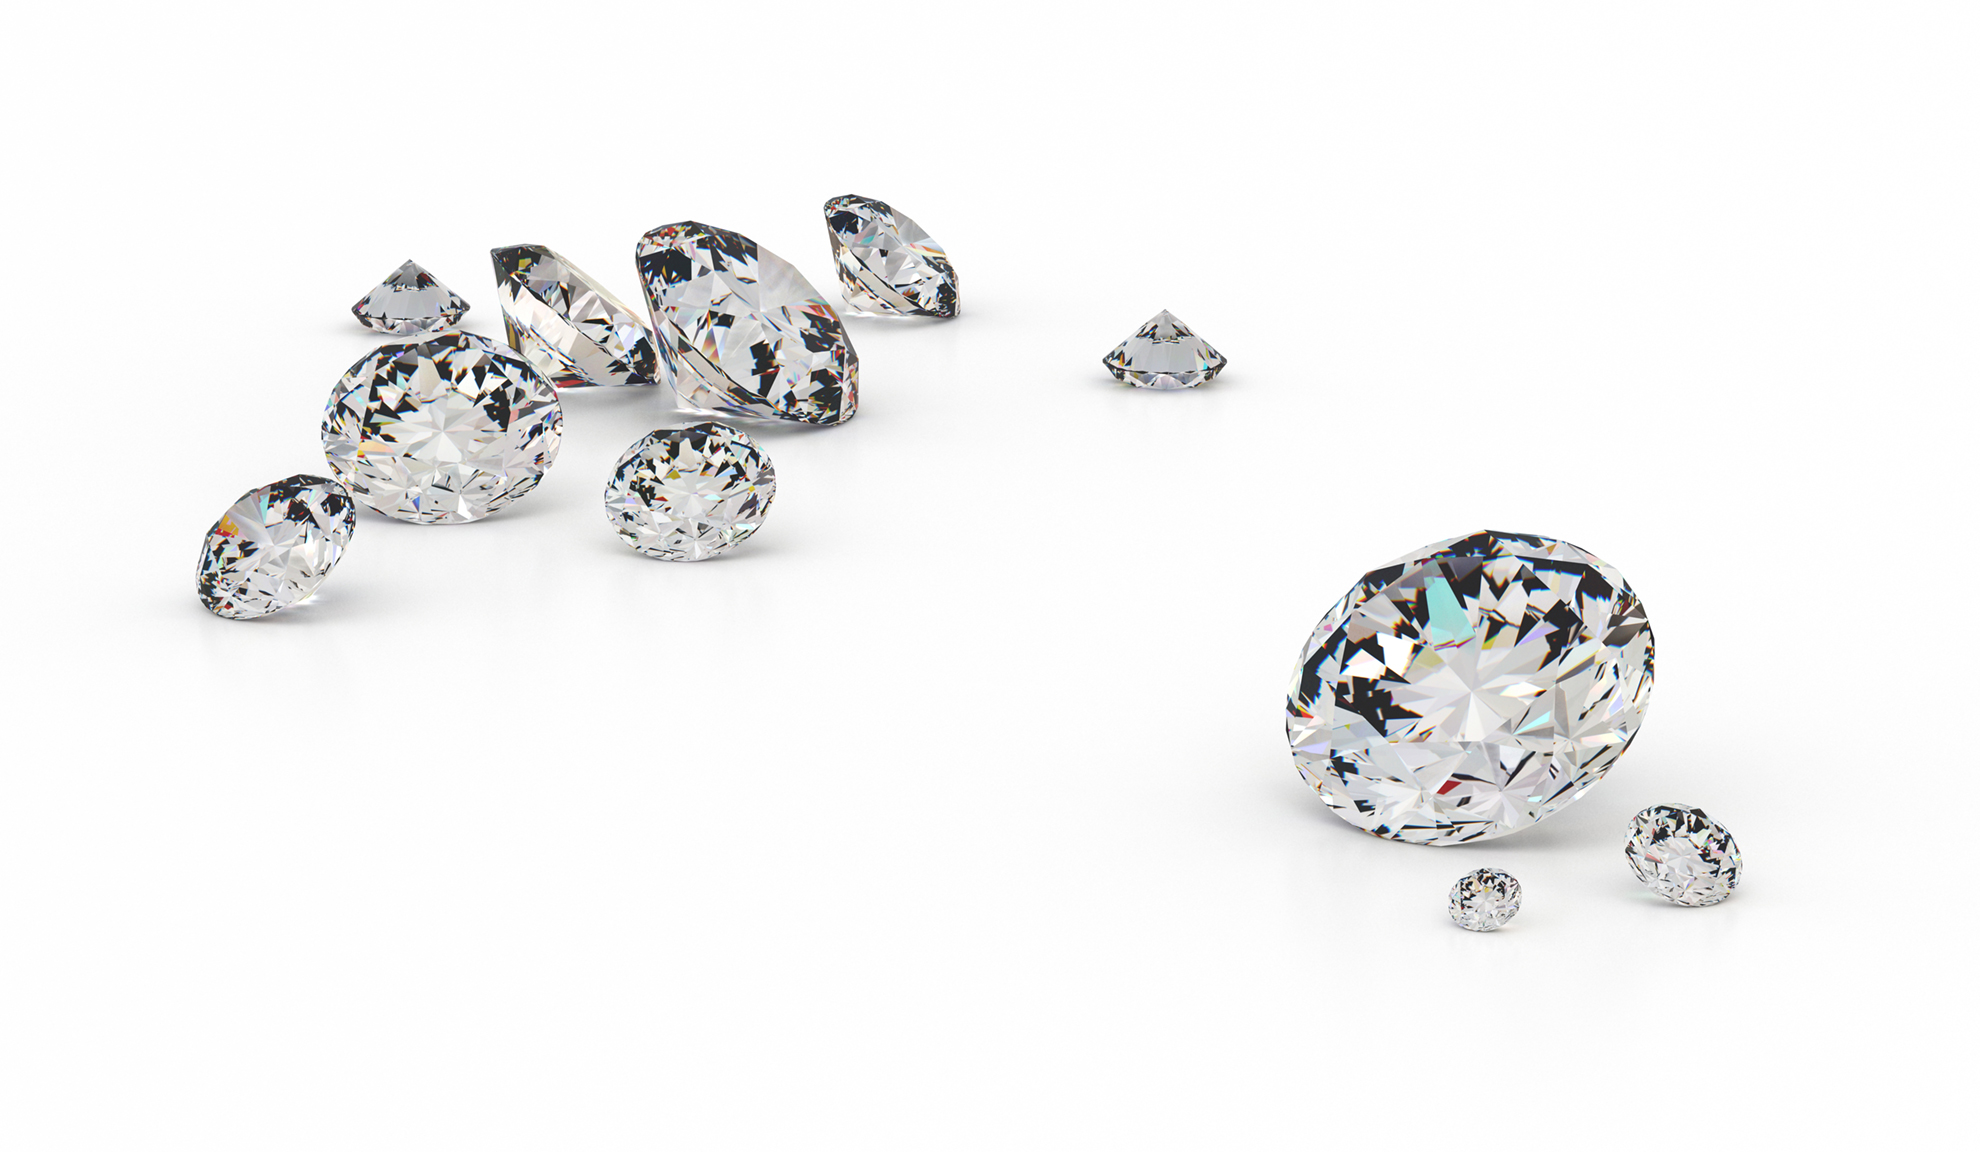 Mange diamanter både store og små der skinner på en hvid baggrund